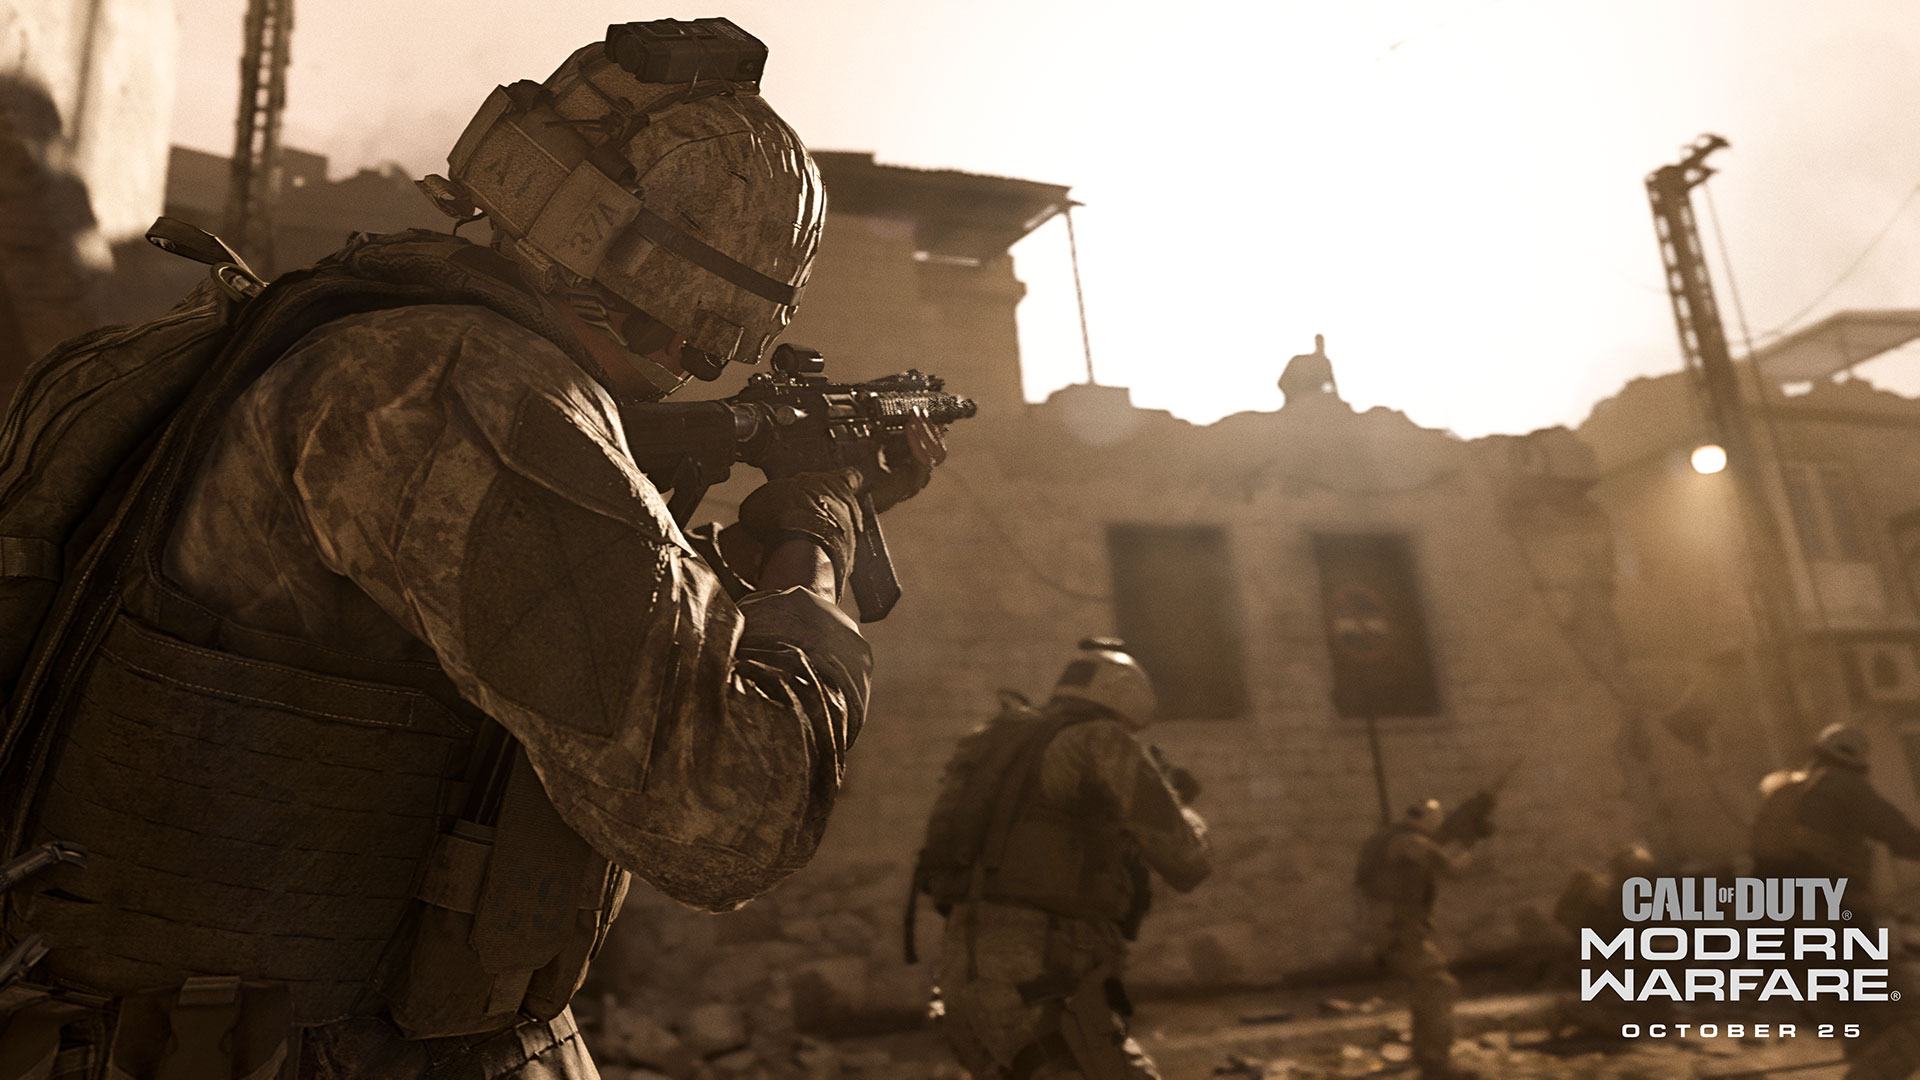 Ultimate Guide to Call of Duty Advanced Warfare